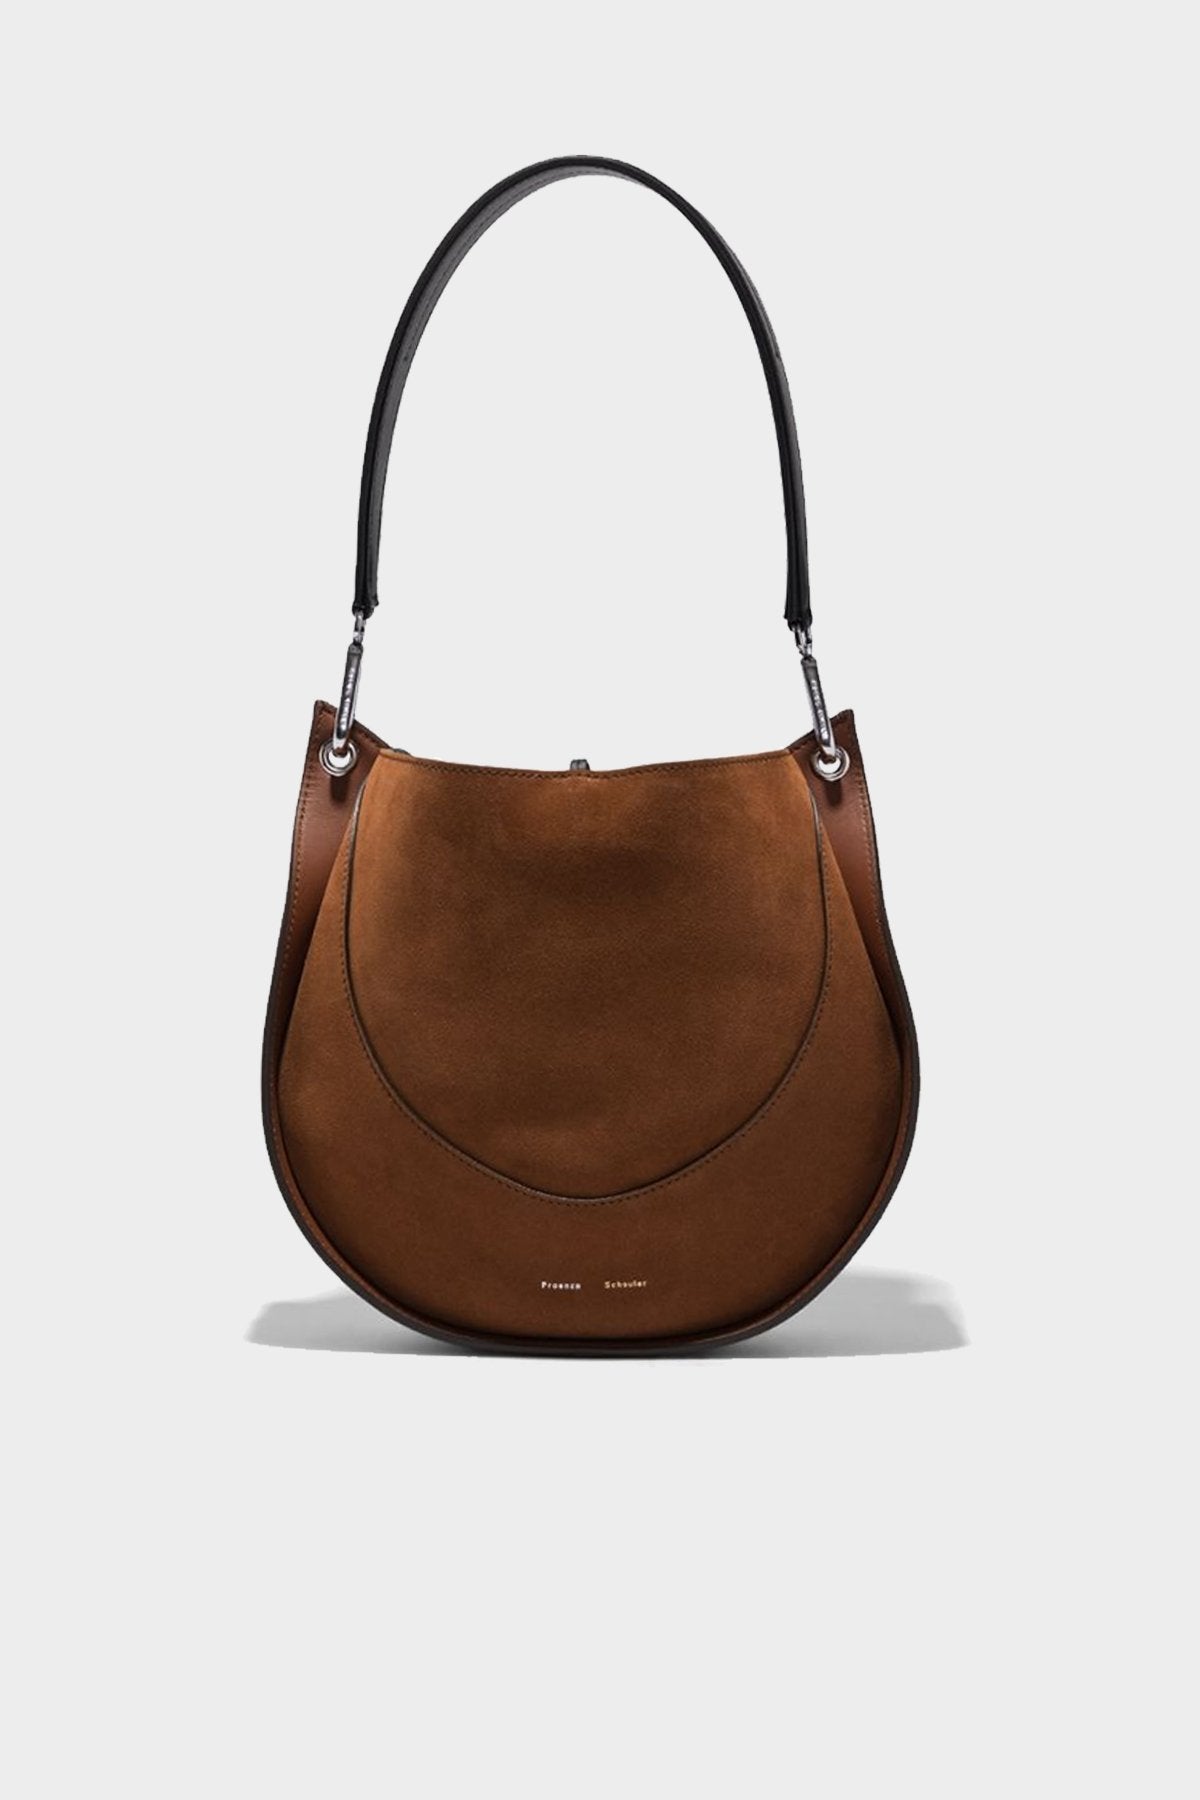 Arch Shoulder Bag in Chocolate - shop-olivia.com